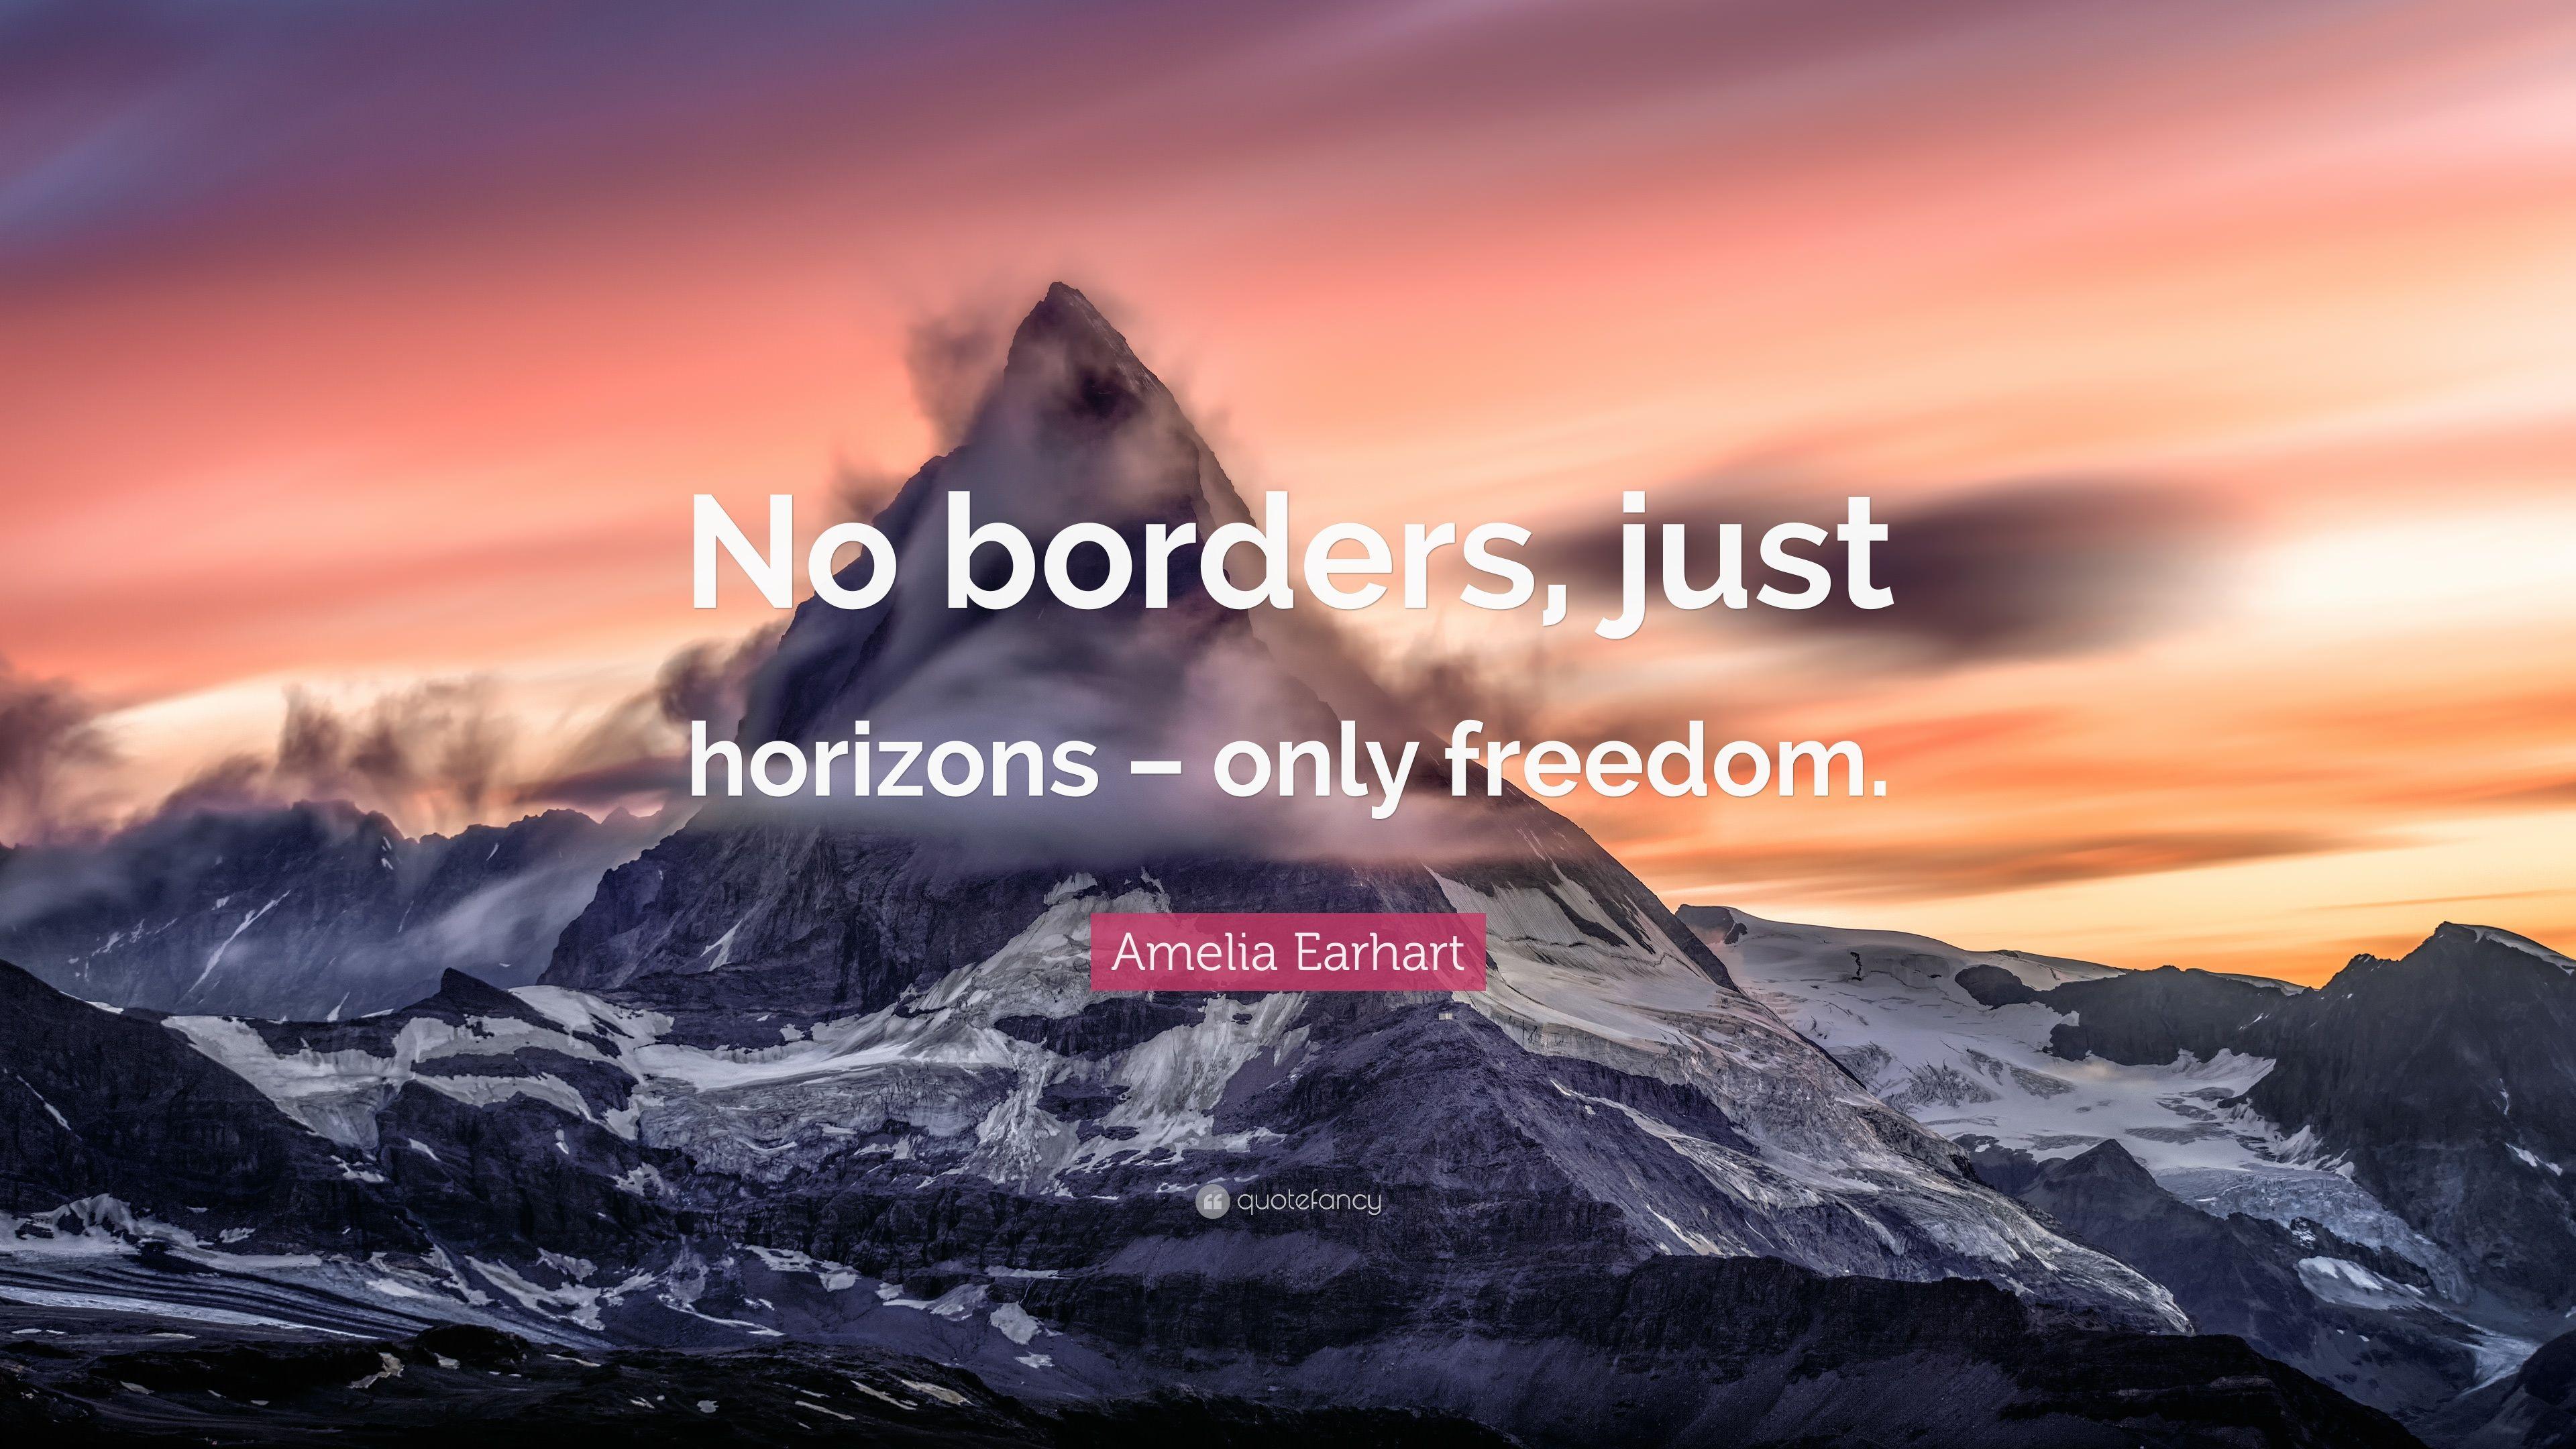 Amelia Earhart Quote: “No borders, just horizons